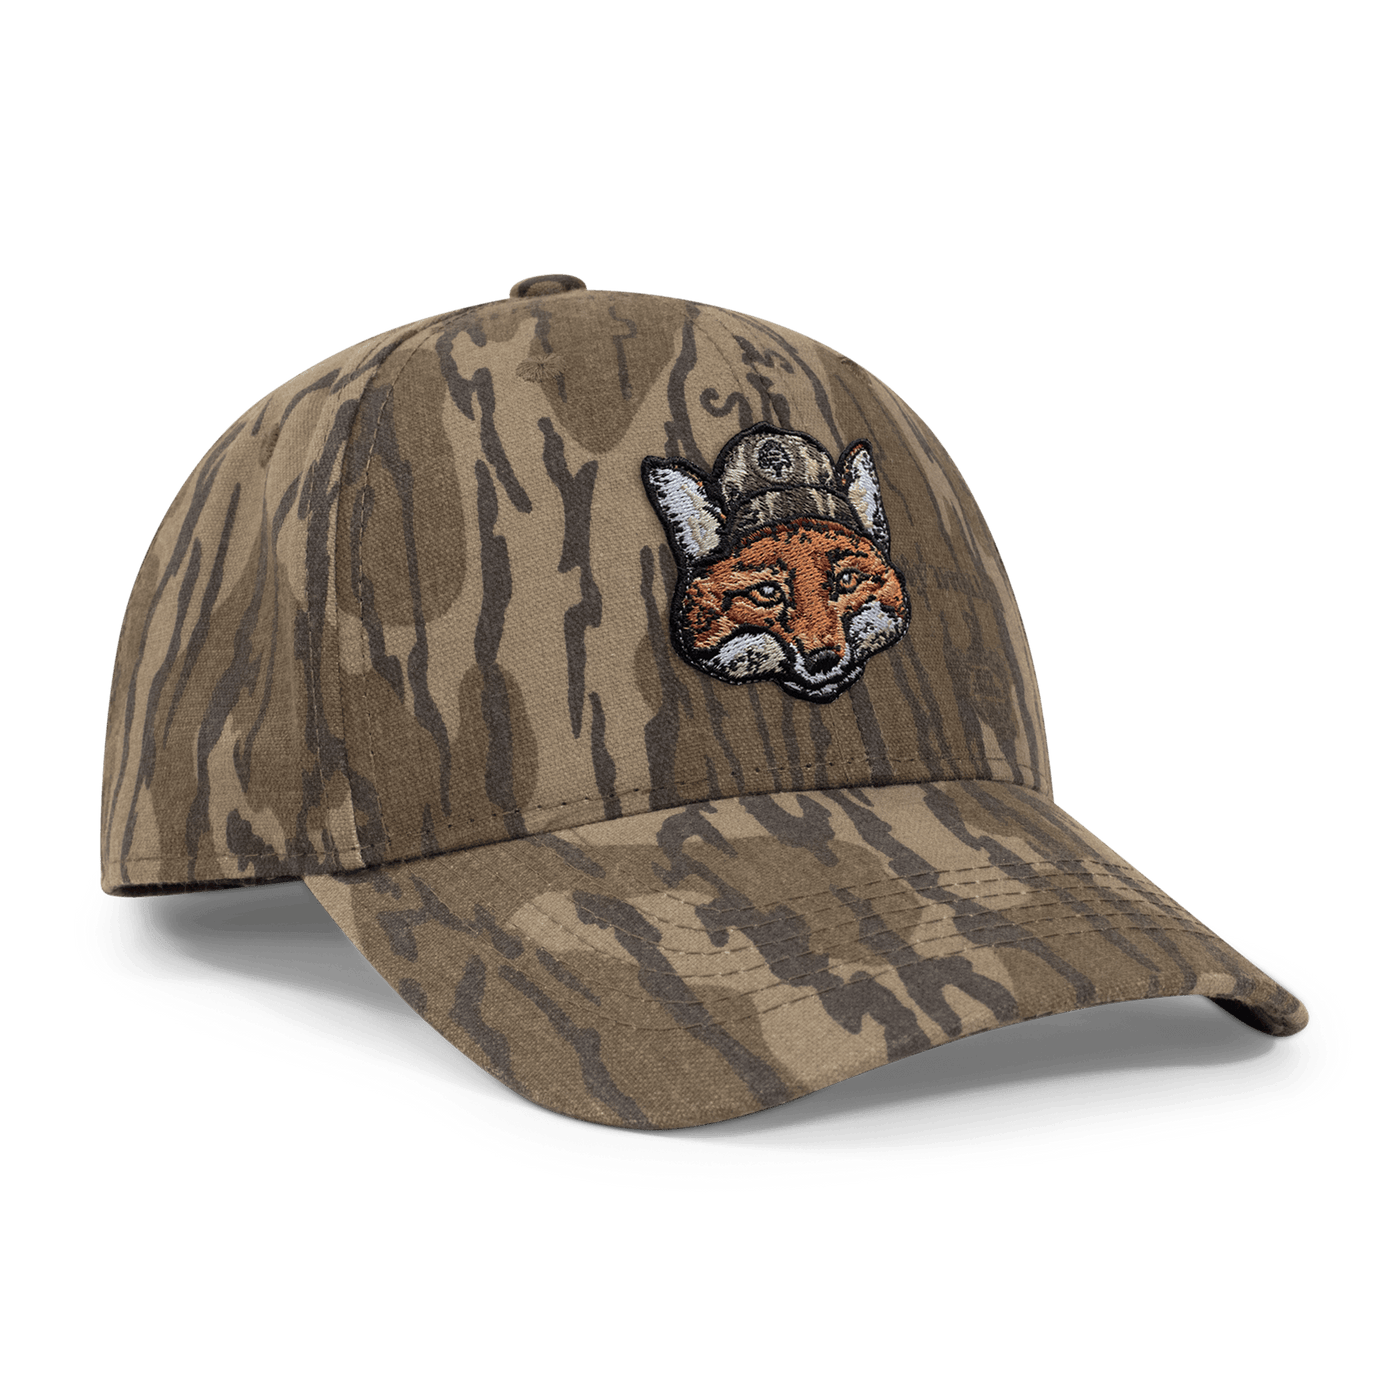 Mr. Fox 6-Panel Hat